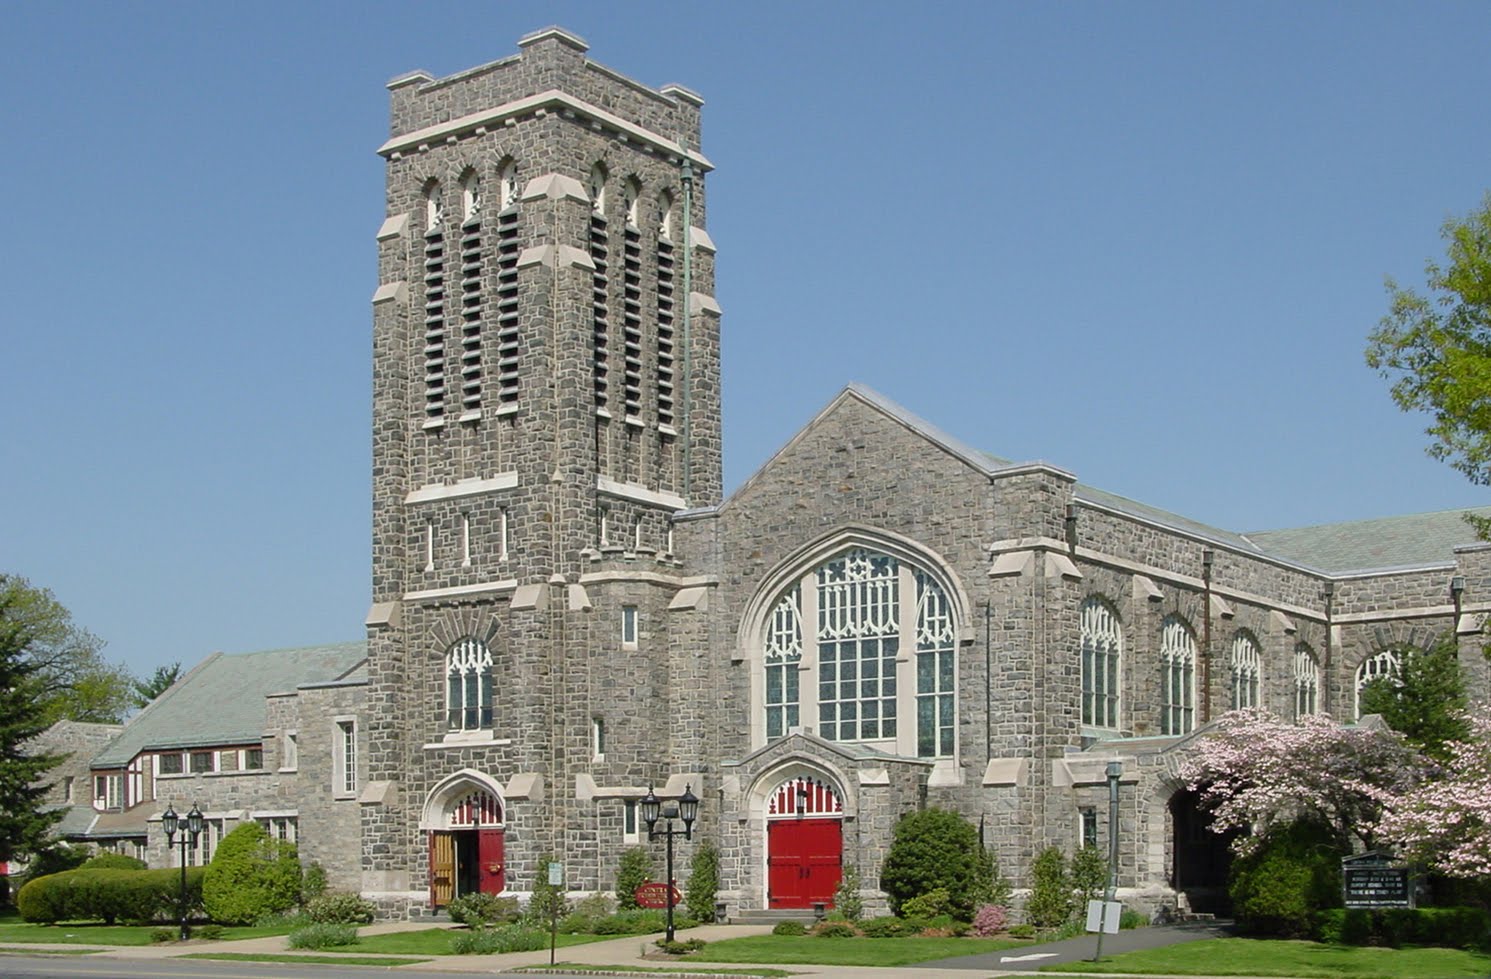 Central Presbyterian Church in Summit NJ